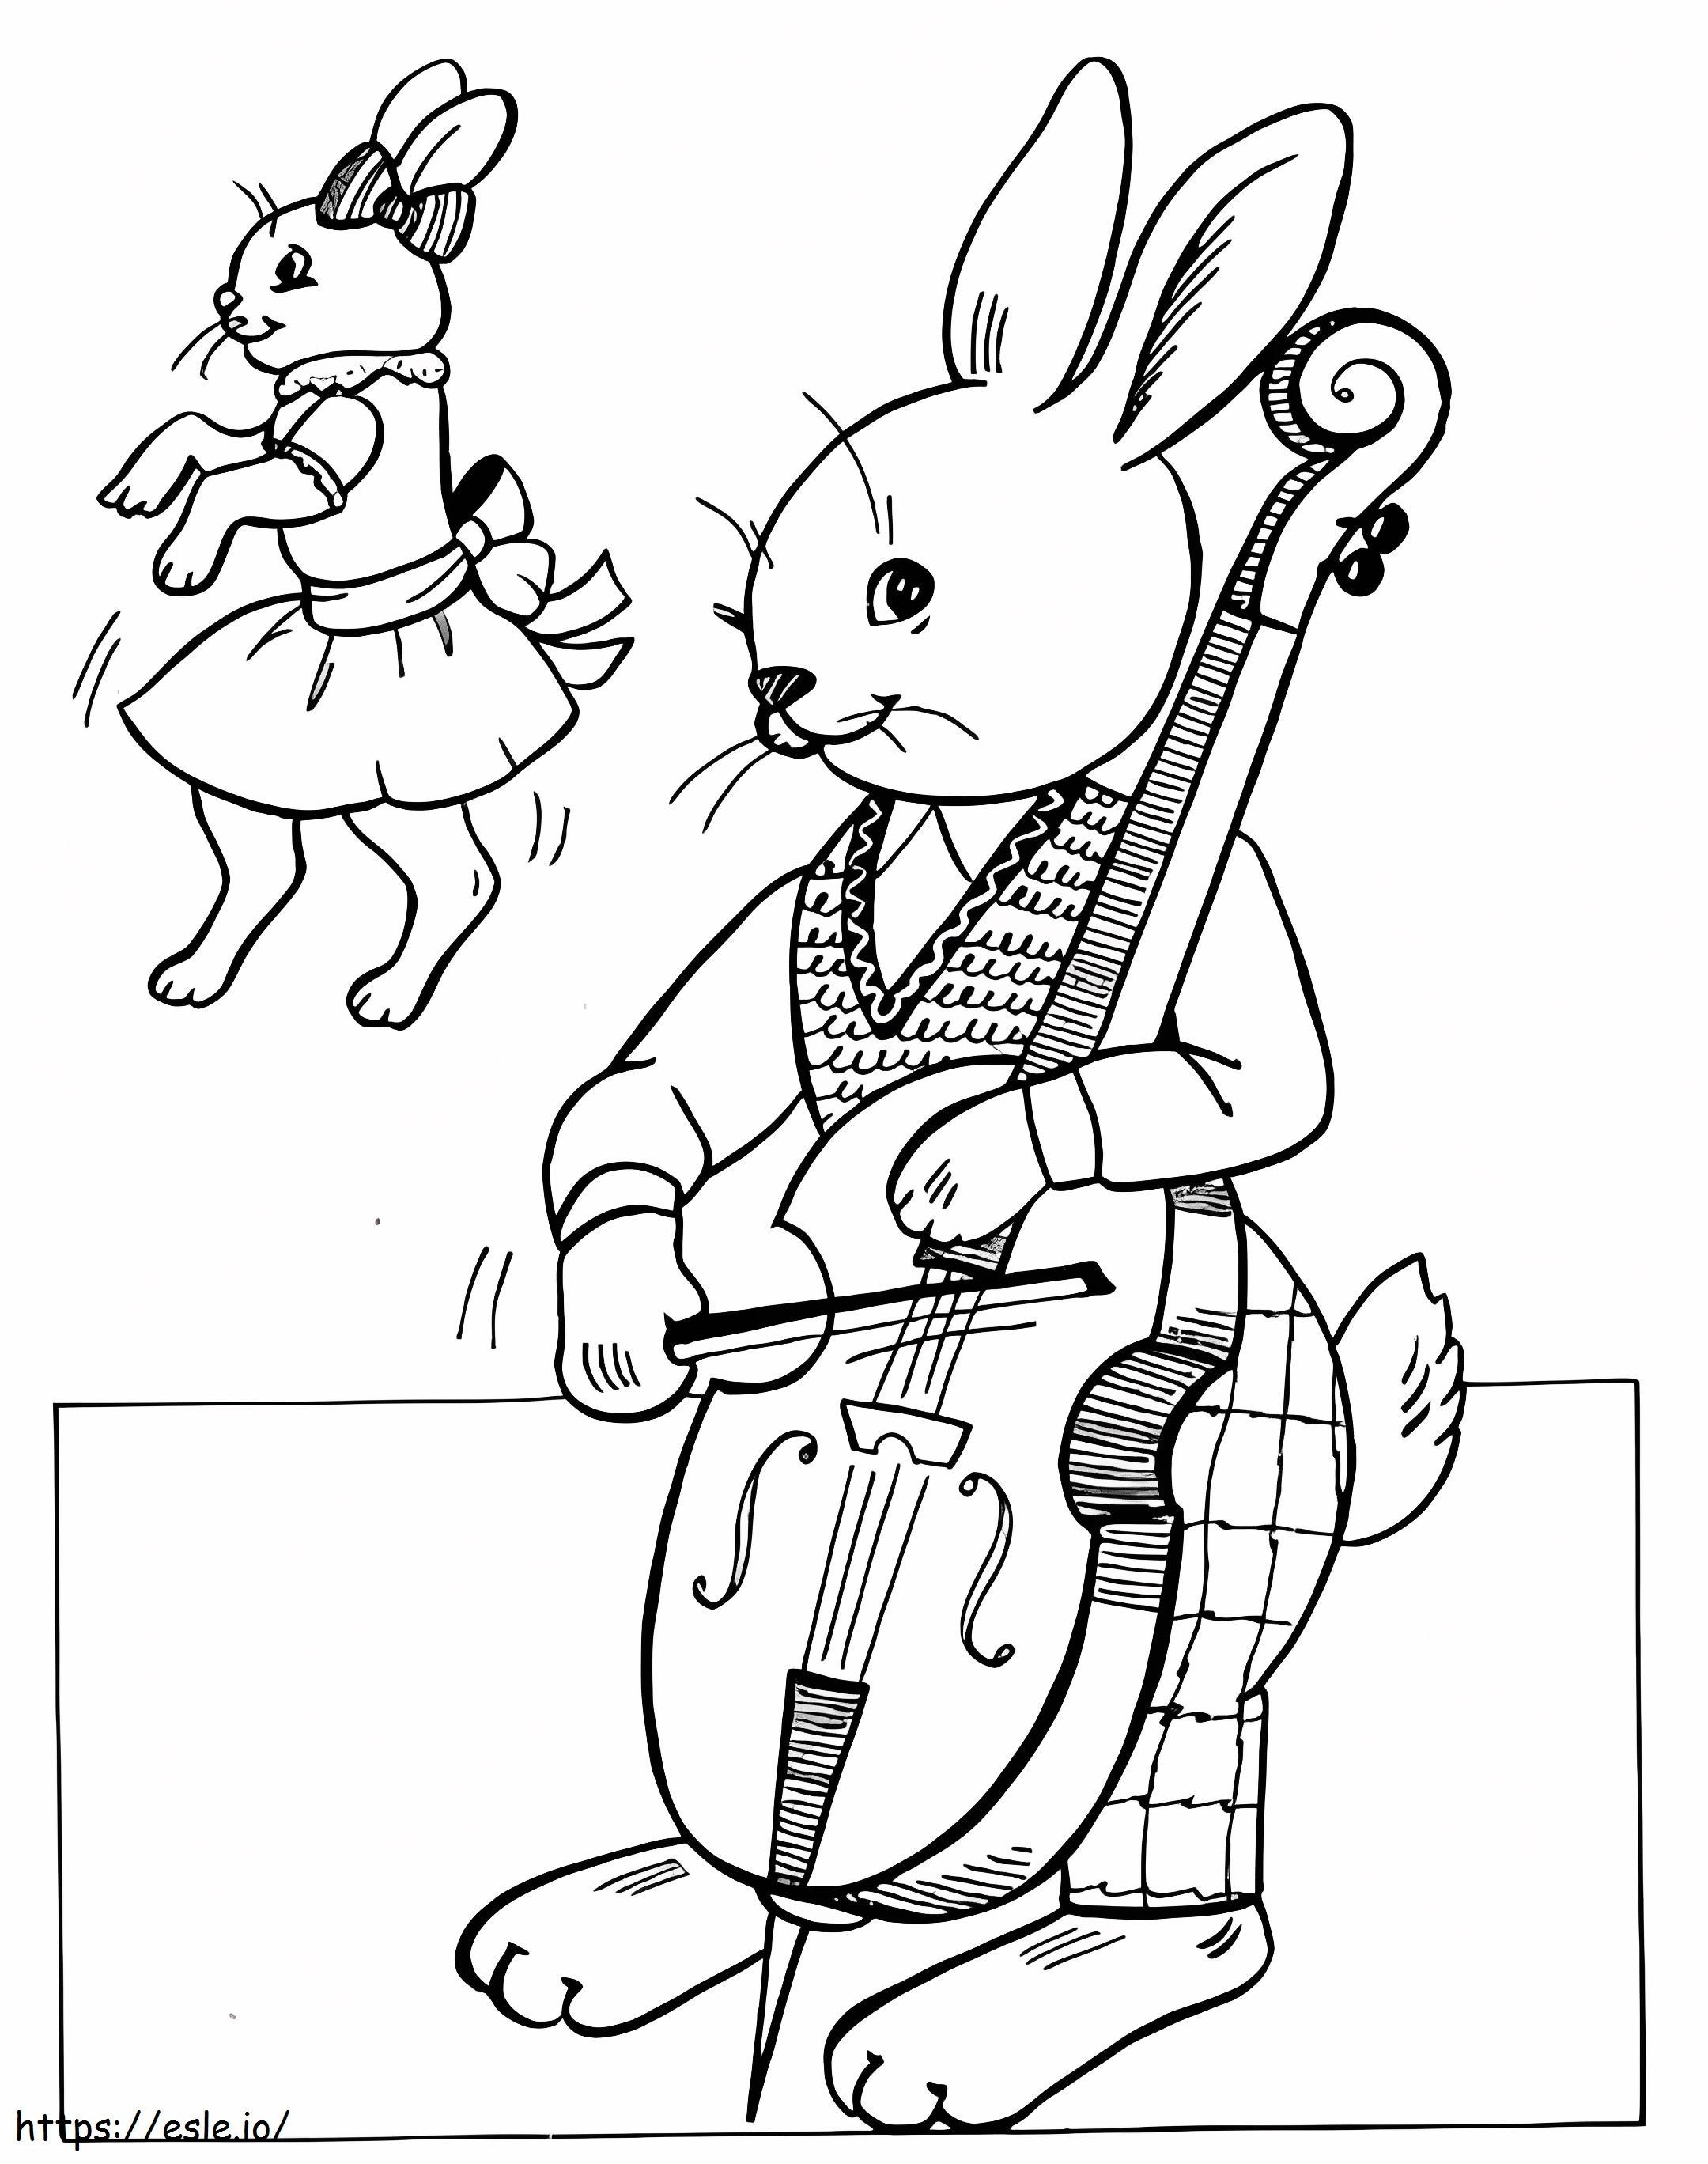 Conejito tocando violonchelo para colorear